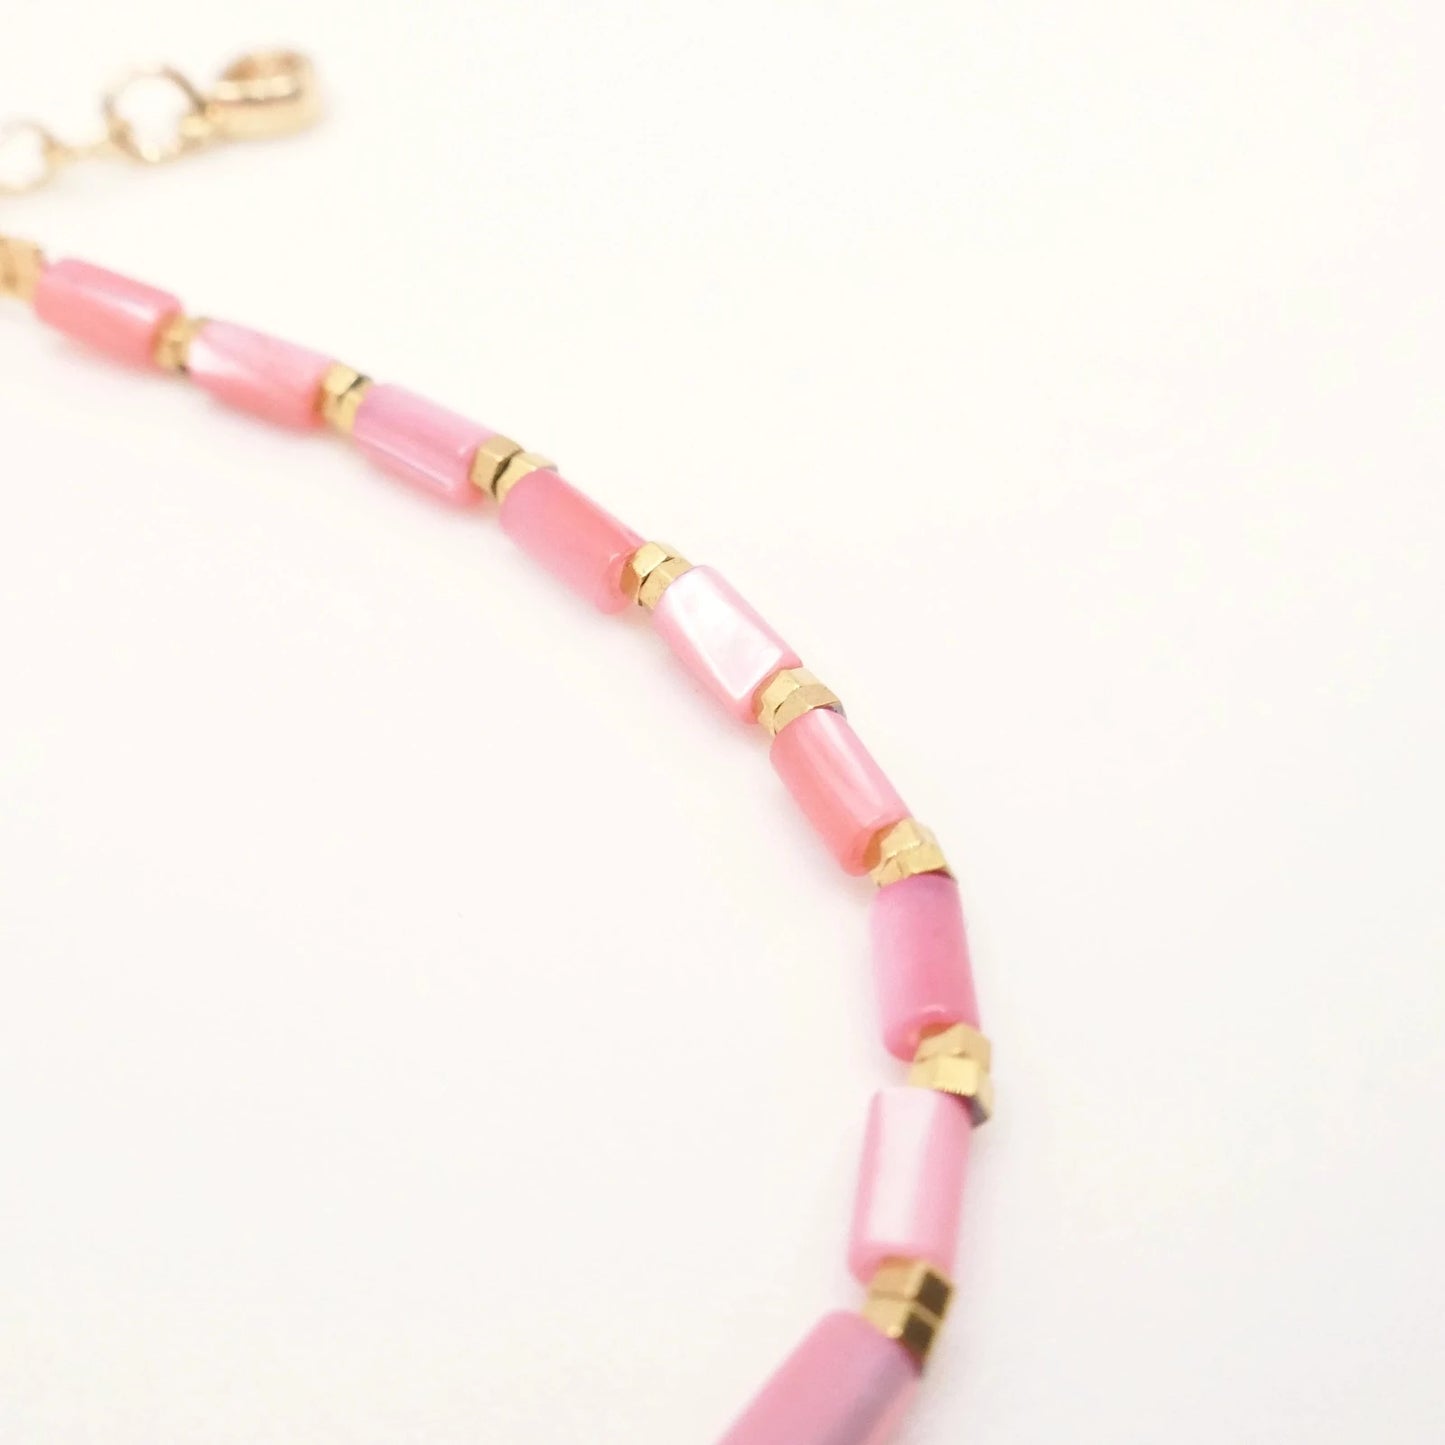 bracelet rose et or en perles et coquillages nacre